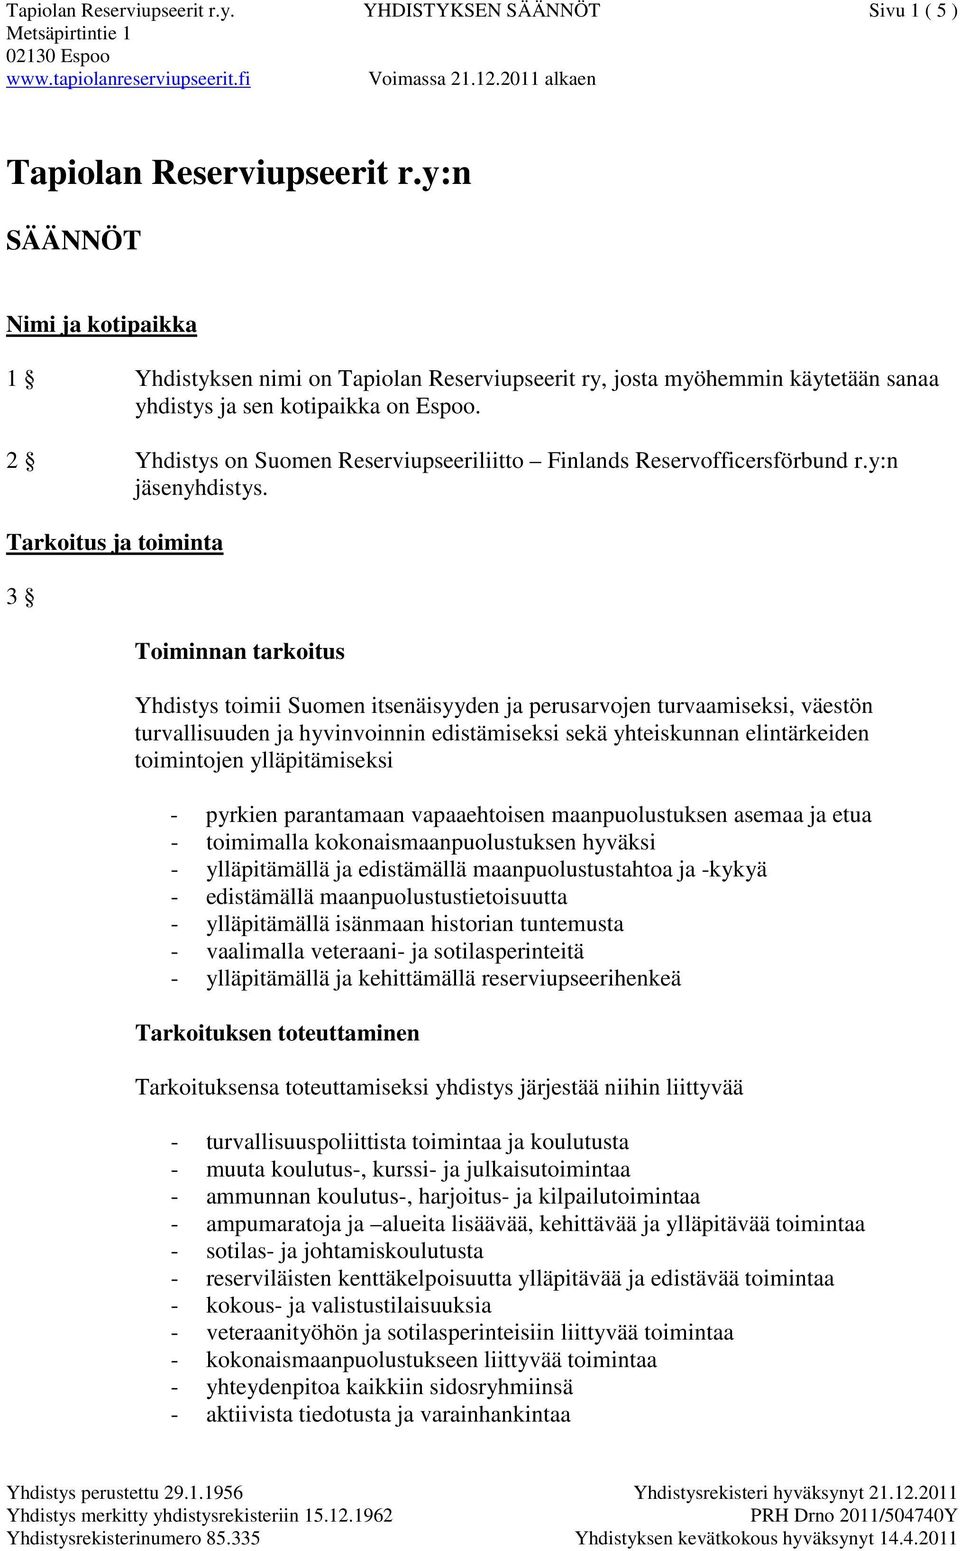 2 Yhdistys on Suomen Reserviupseeriliitto Finlands Reservofficersförbund r.y:n jäsenyhdistys.